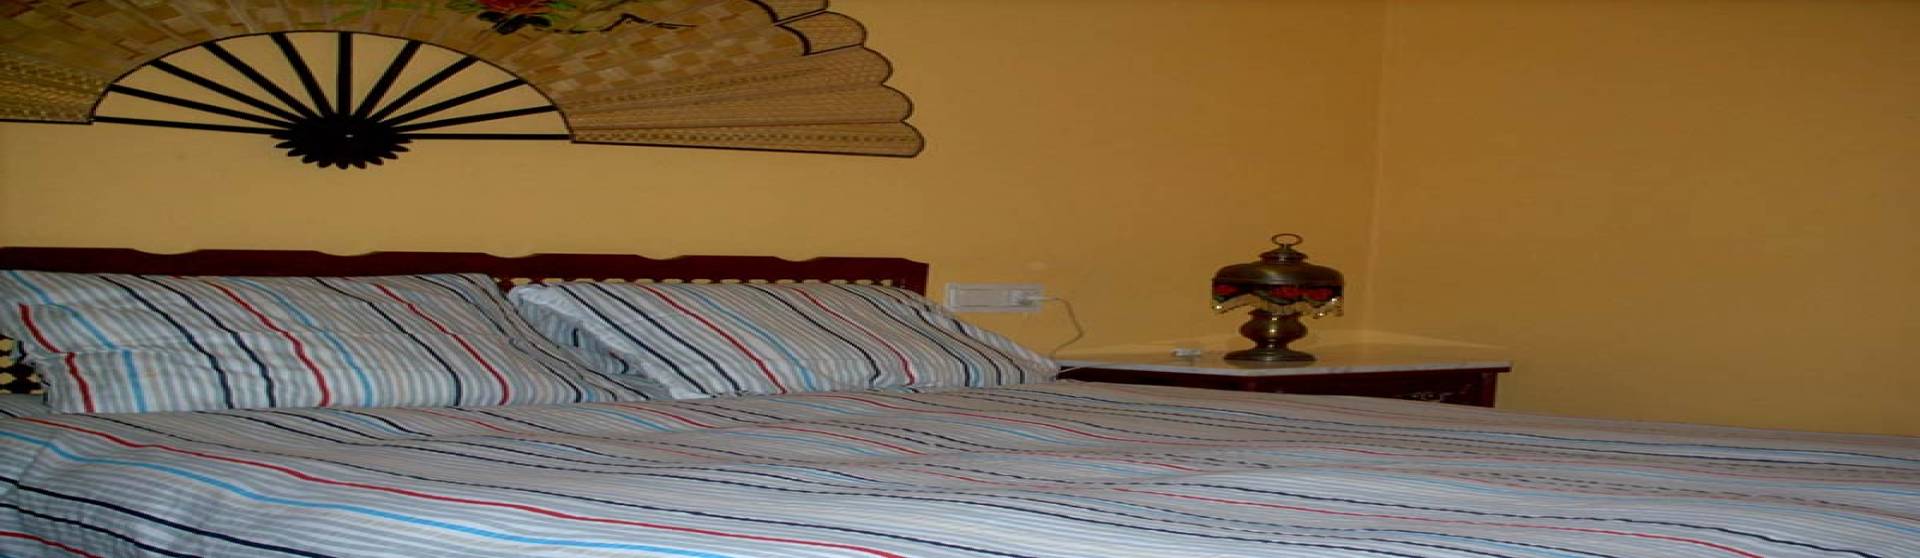 1 Schlafzimmer, Apartement, Ferienhaus, Ctra. del Faro de Trafalgar , Listing ID 1108, Barbate Cádiz, Andalusien, Spanien, 11159,